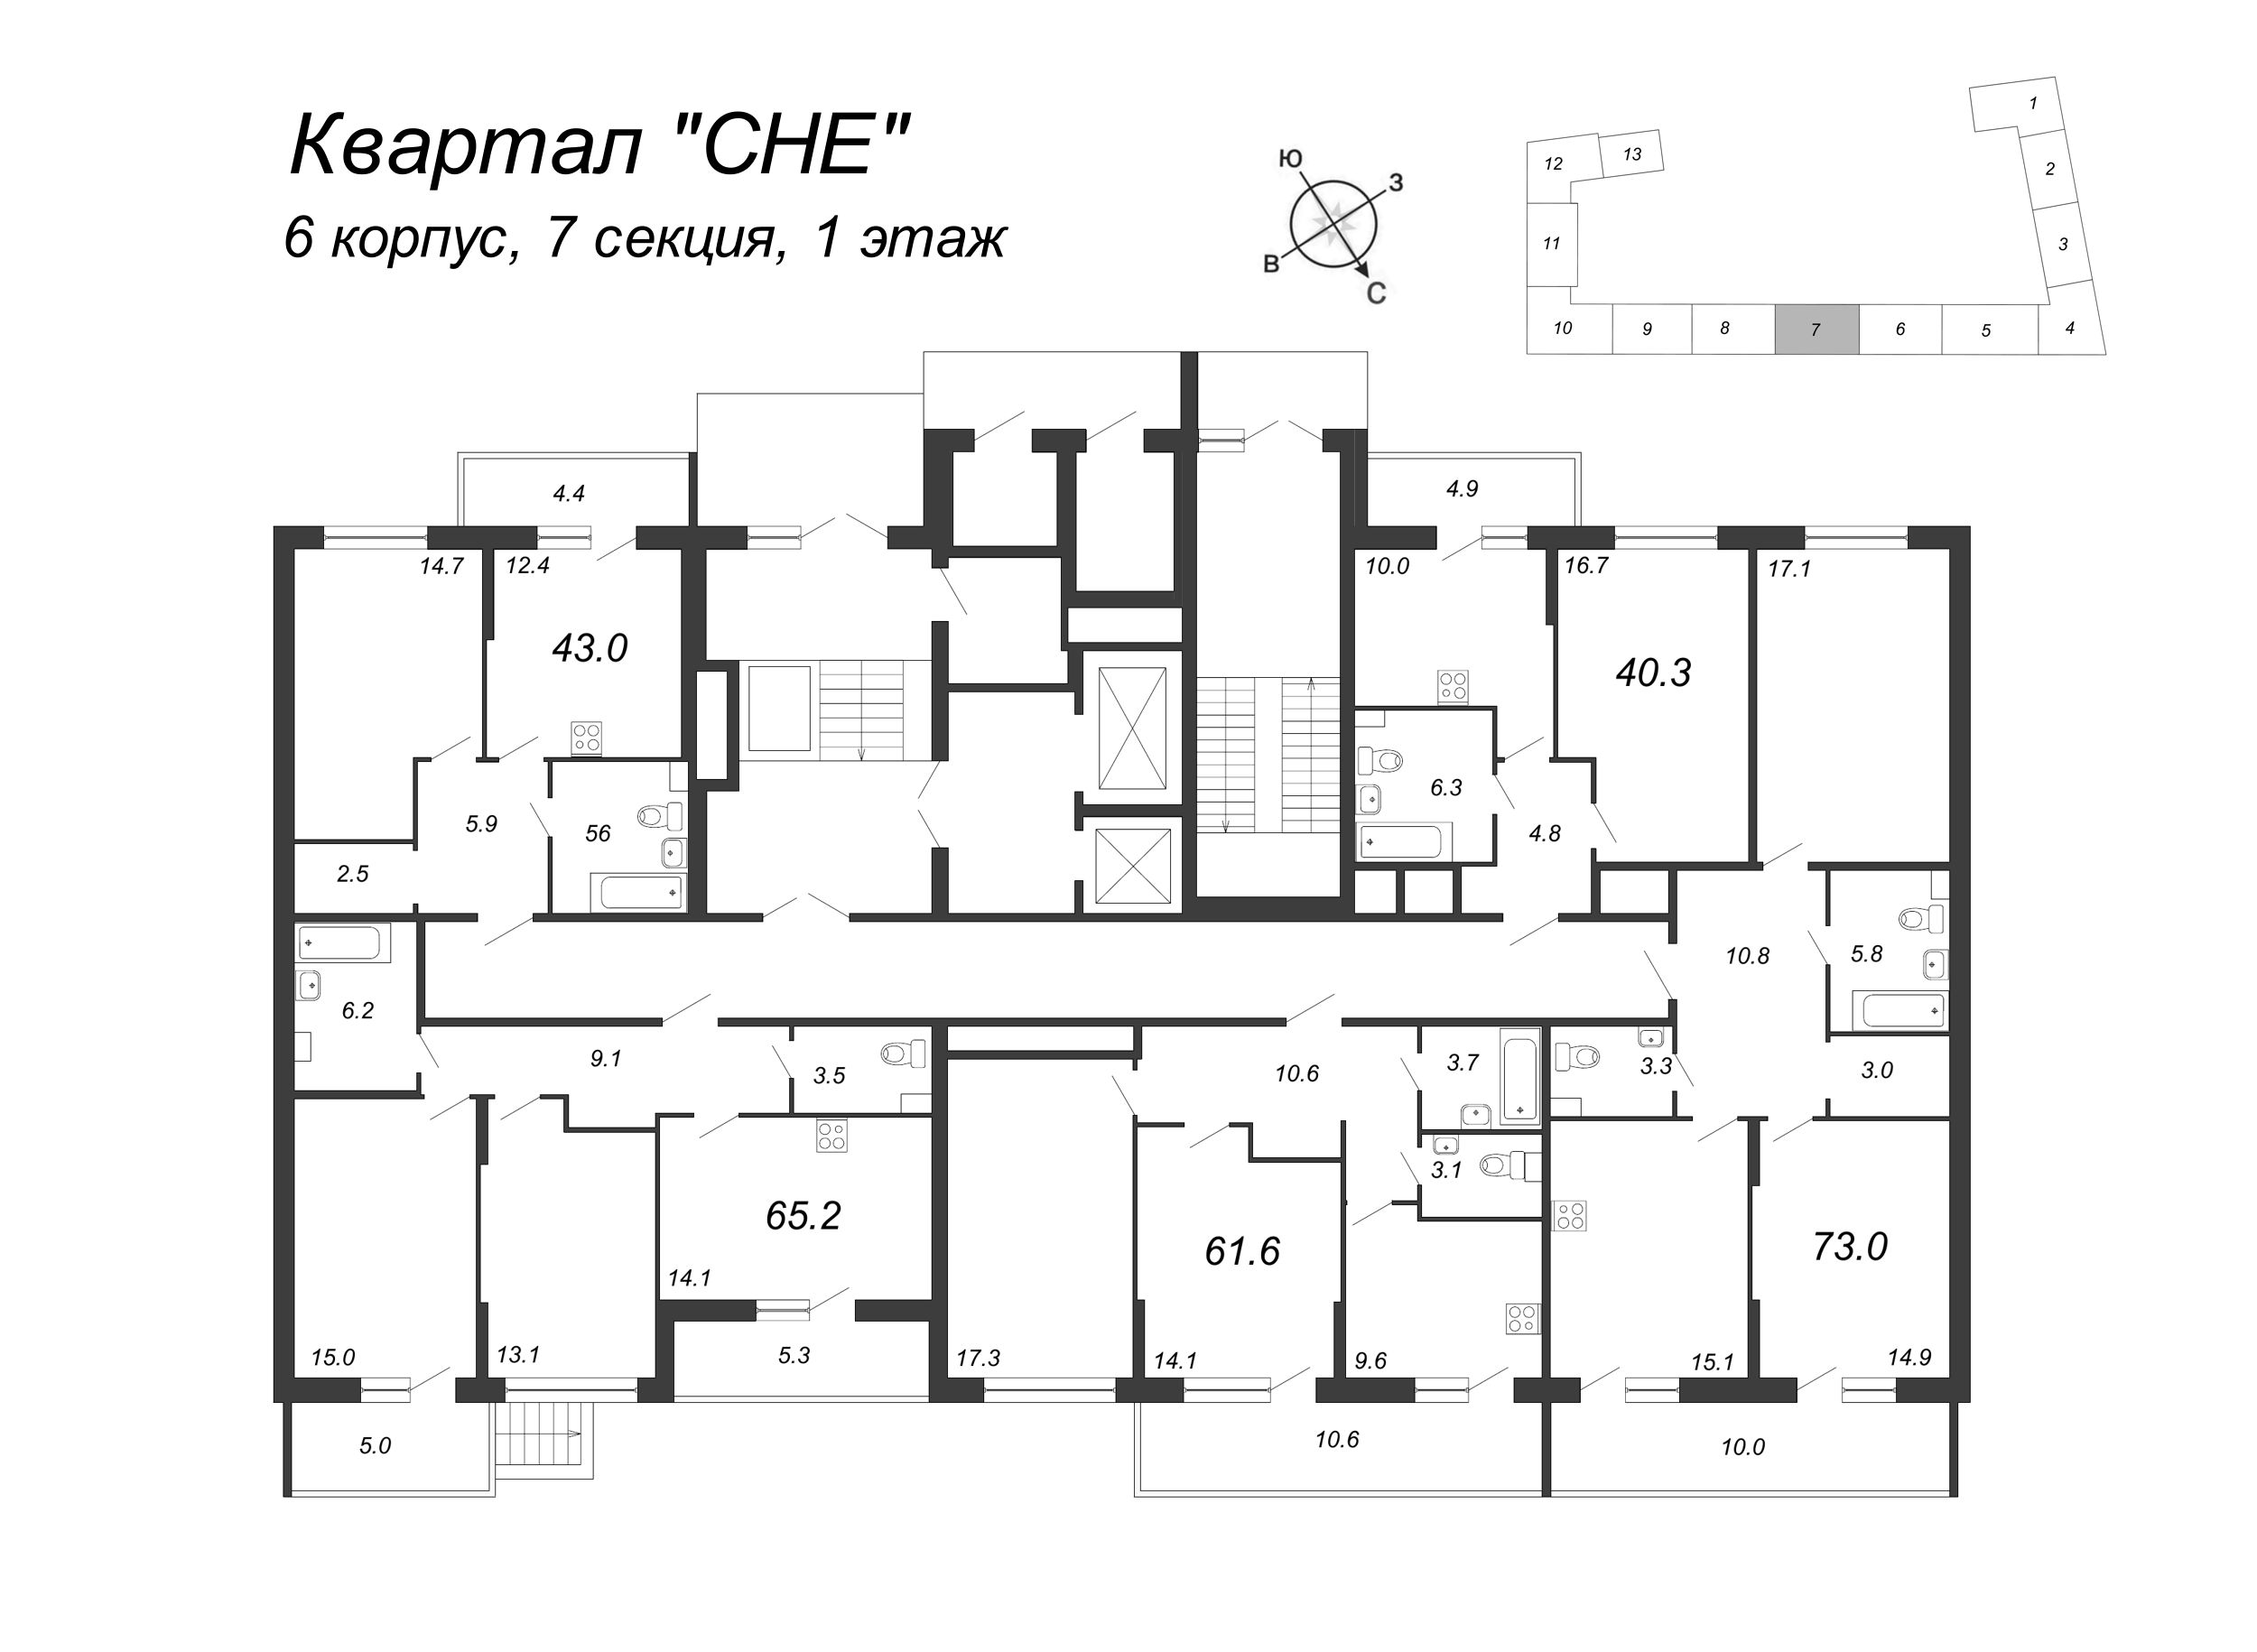 1-комнатная квартира, 42.9 м² в ЖК "Квартал Che" - планировка этажа